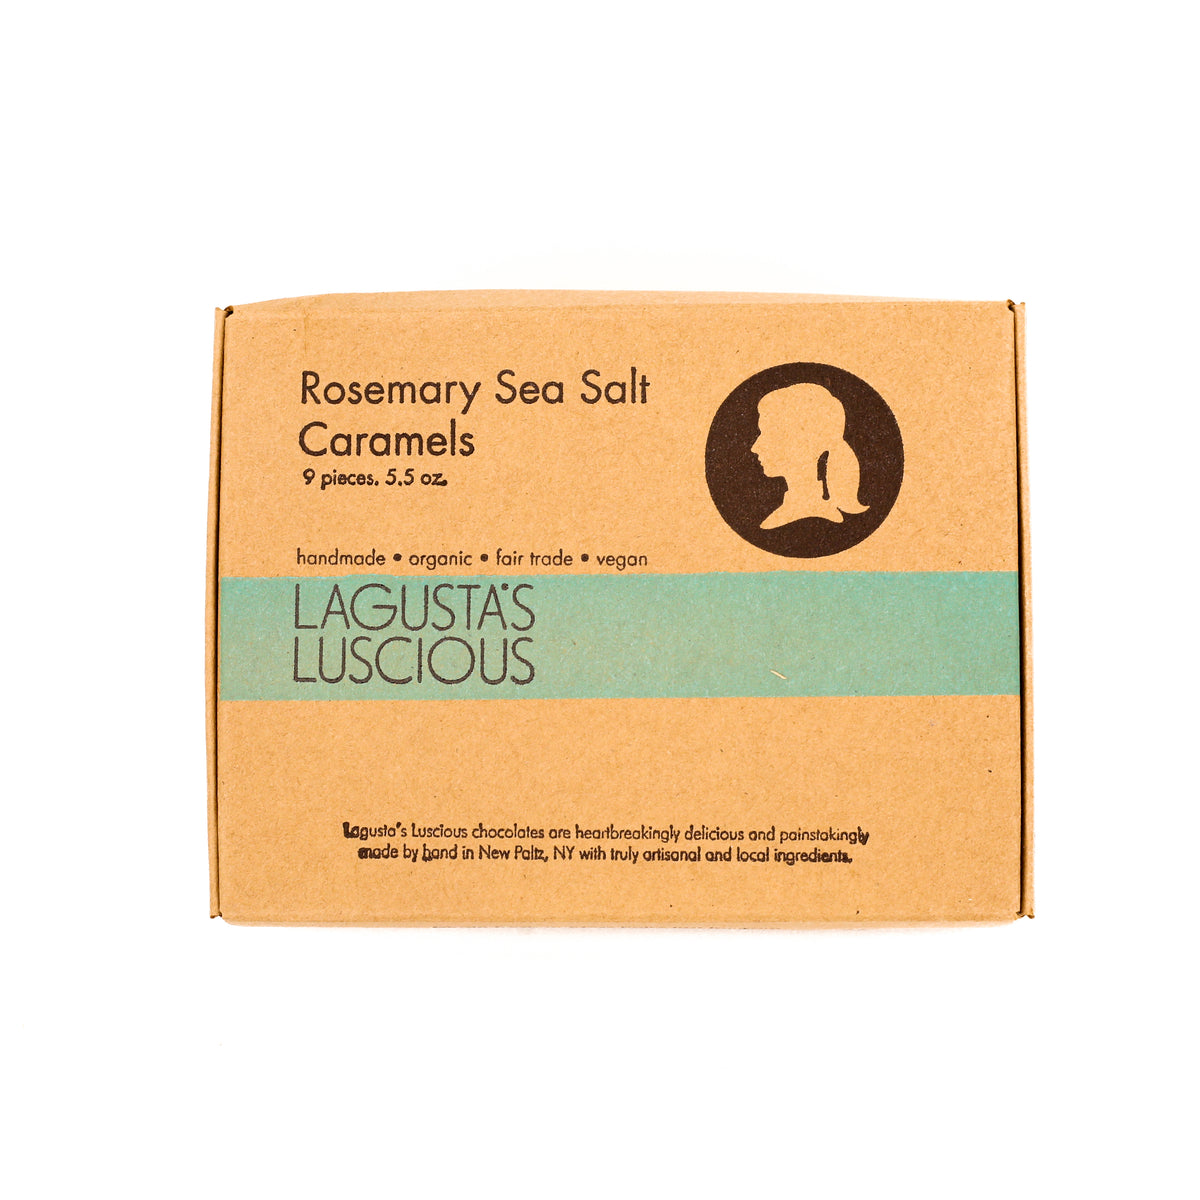 Lagustas Luscious Caramel Box Rosemary Sea Salt